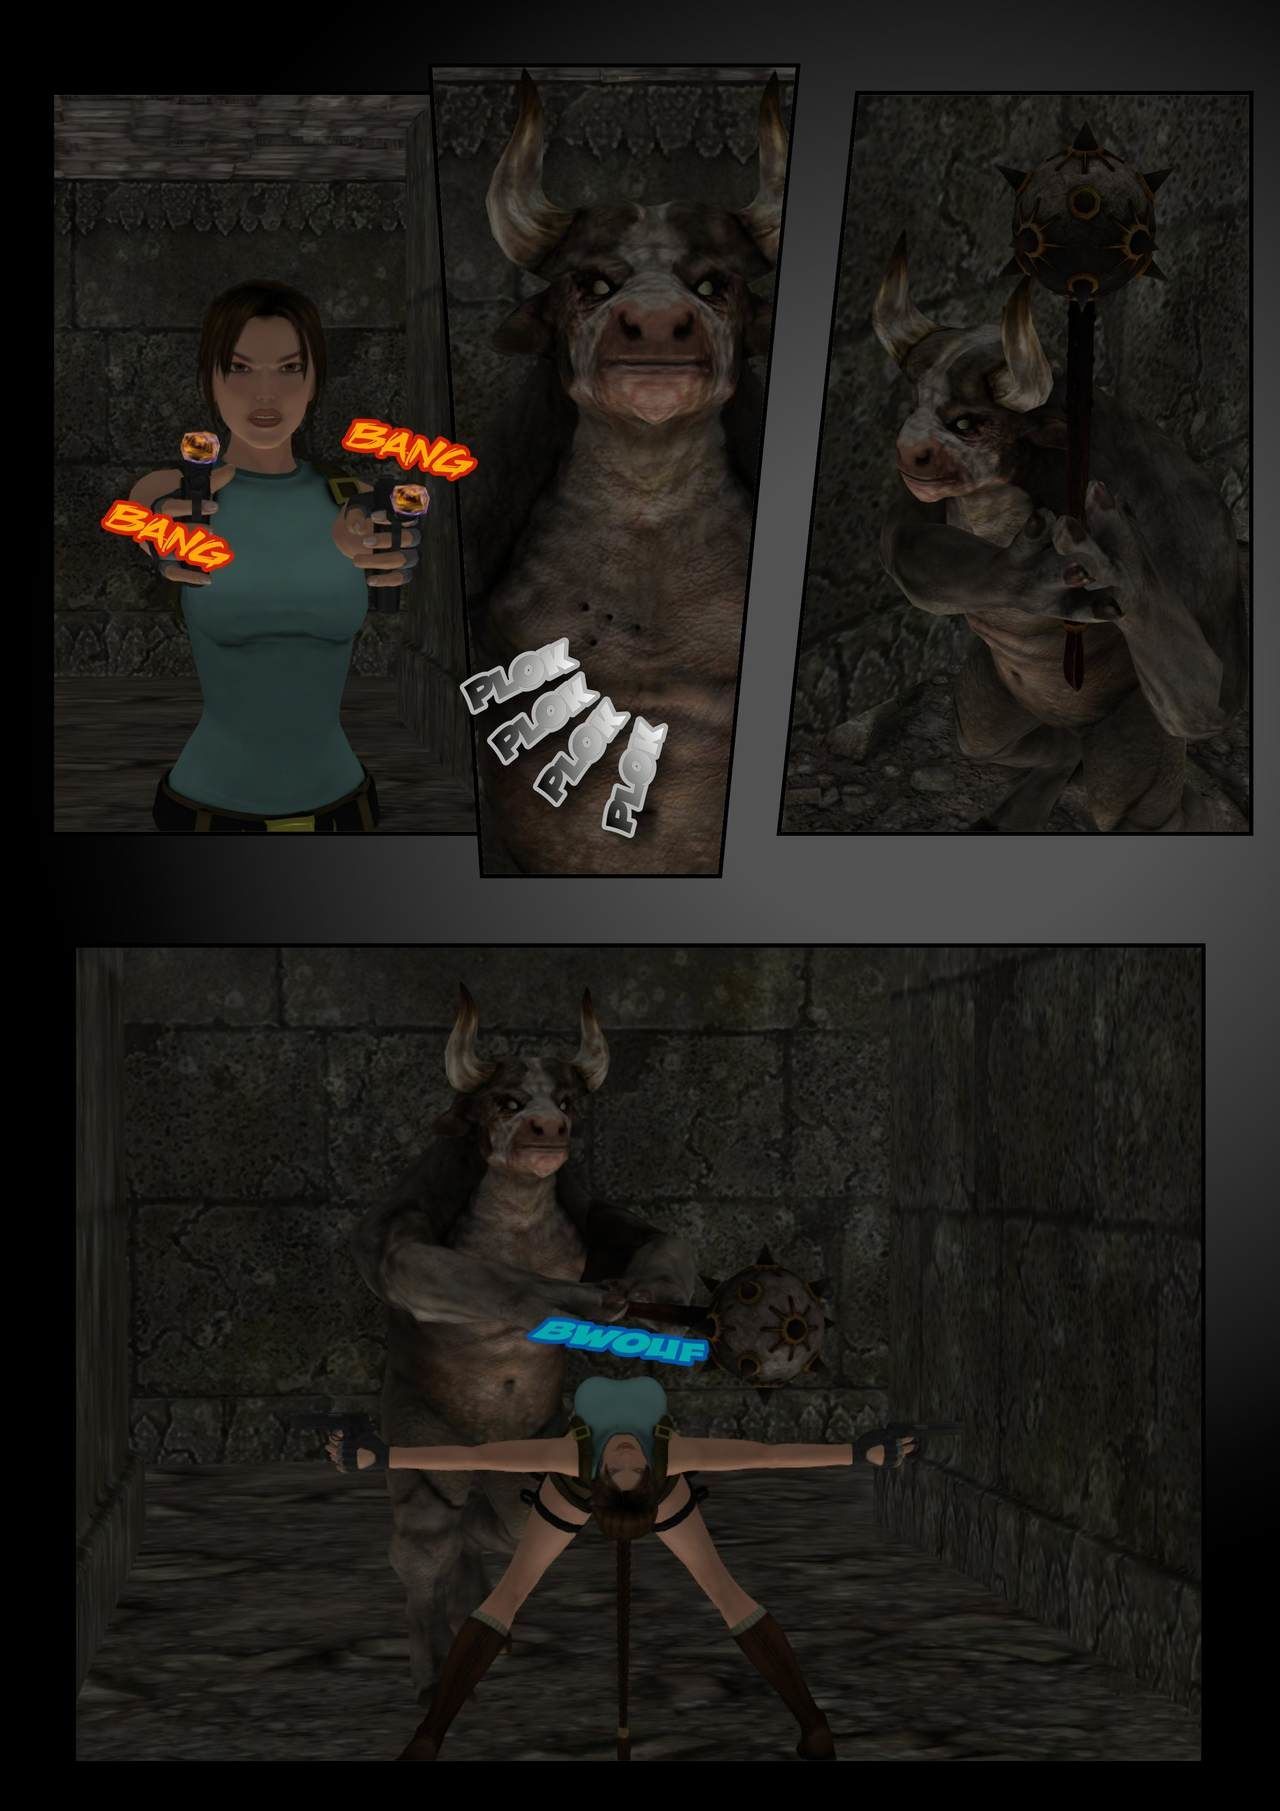 Lara Croft vs el minotaurus w.i.p.